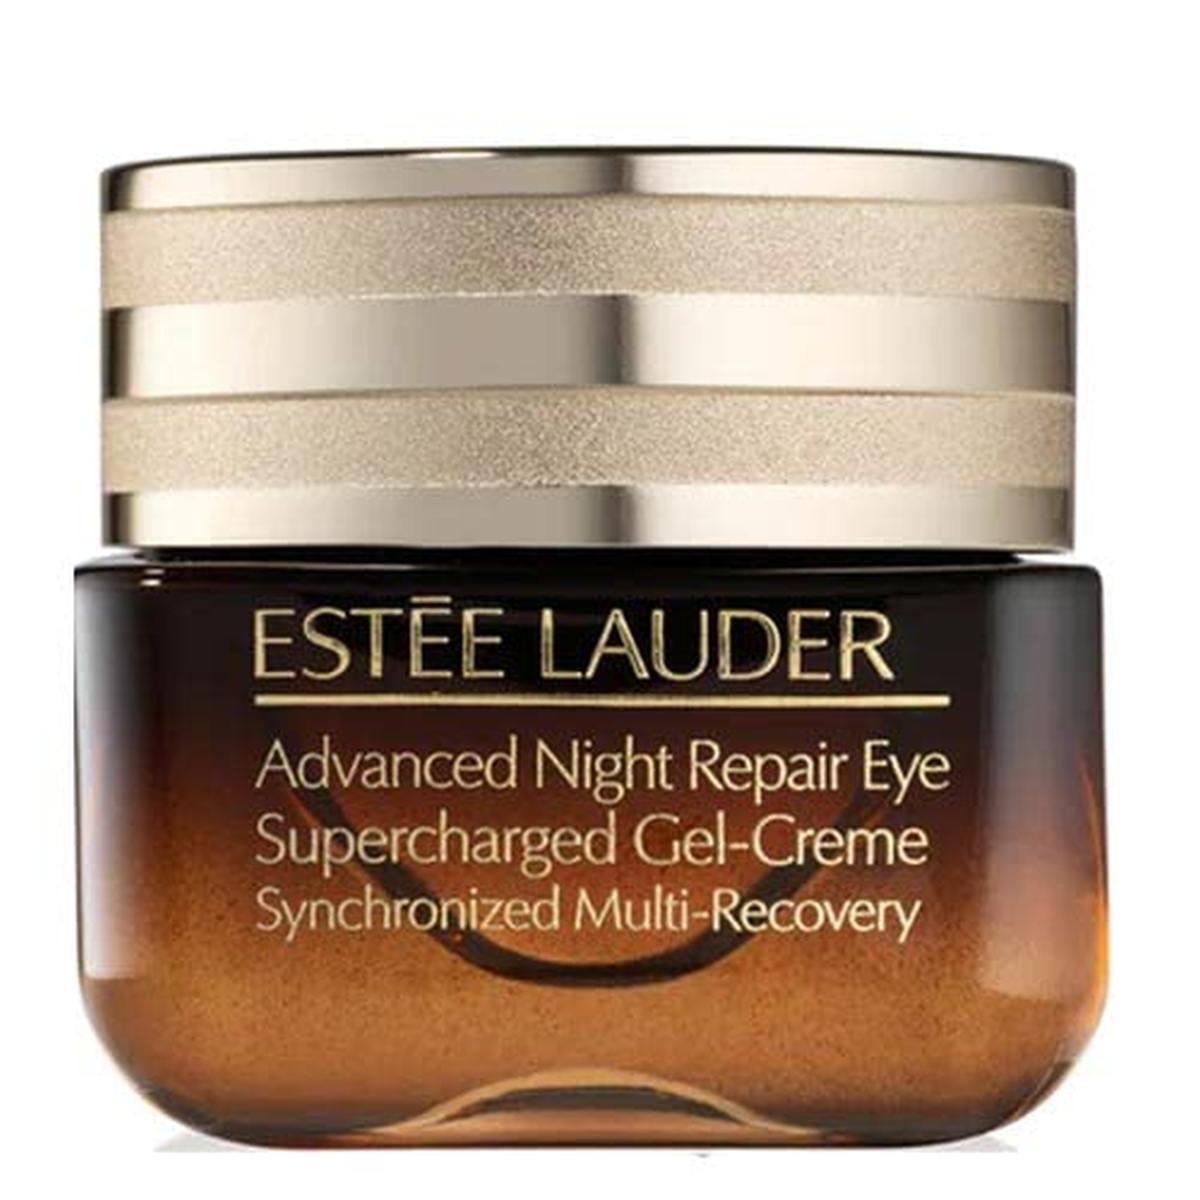 Advanced night repair eye supercharged gel creme 15 ml